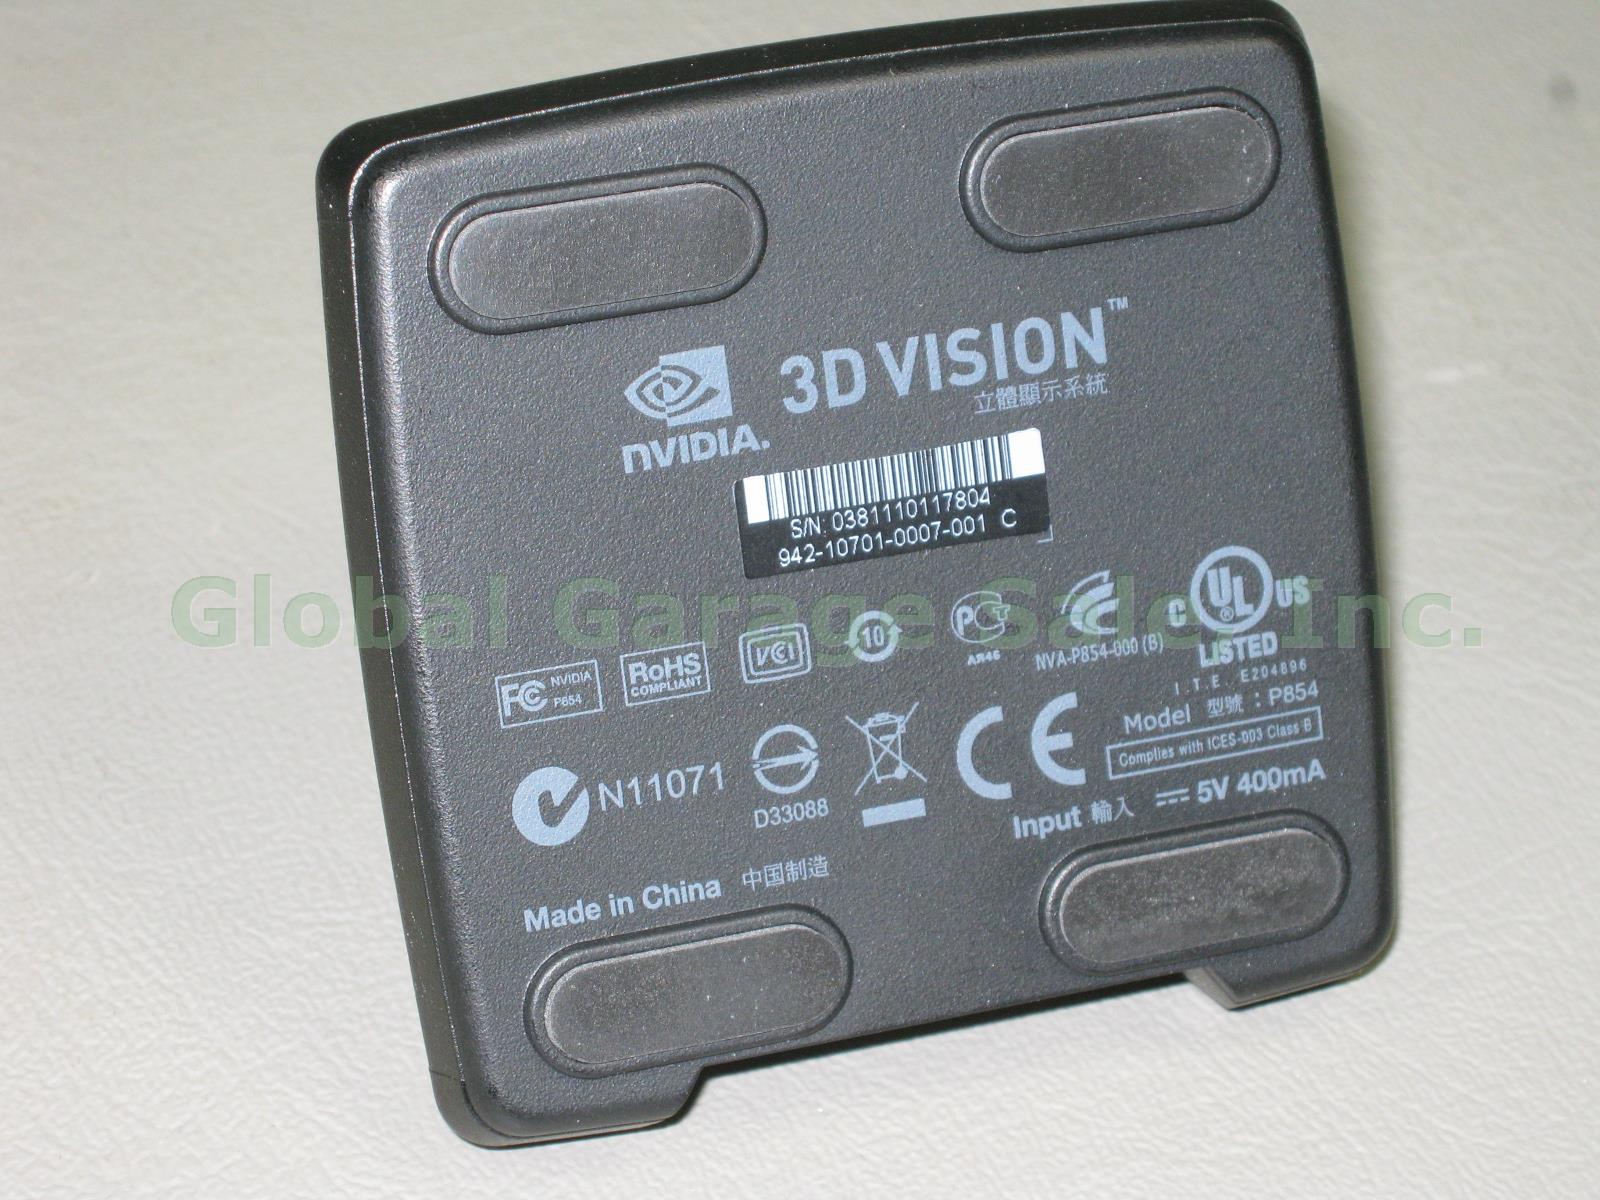 Nvidia GeForce 3D Vision Wireless Active Shutter Glasses Kit P854 W/ IR Emitter 5